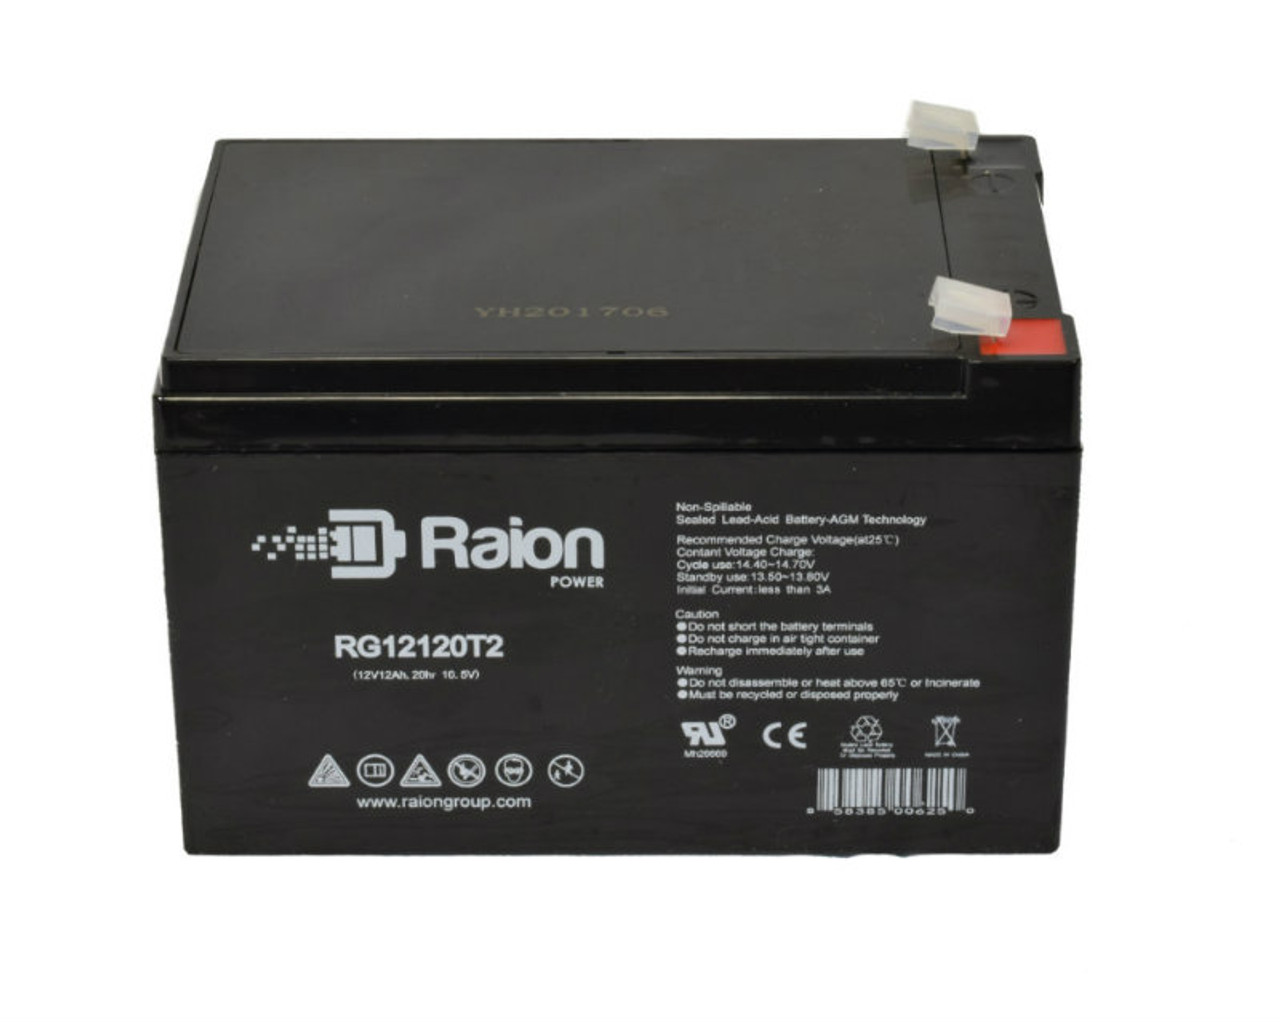 Raion Power RG12120T2 SLA Battery for Zeus PC12-12F2